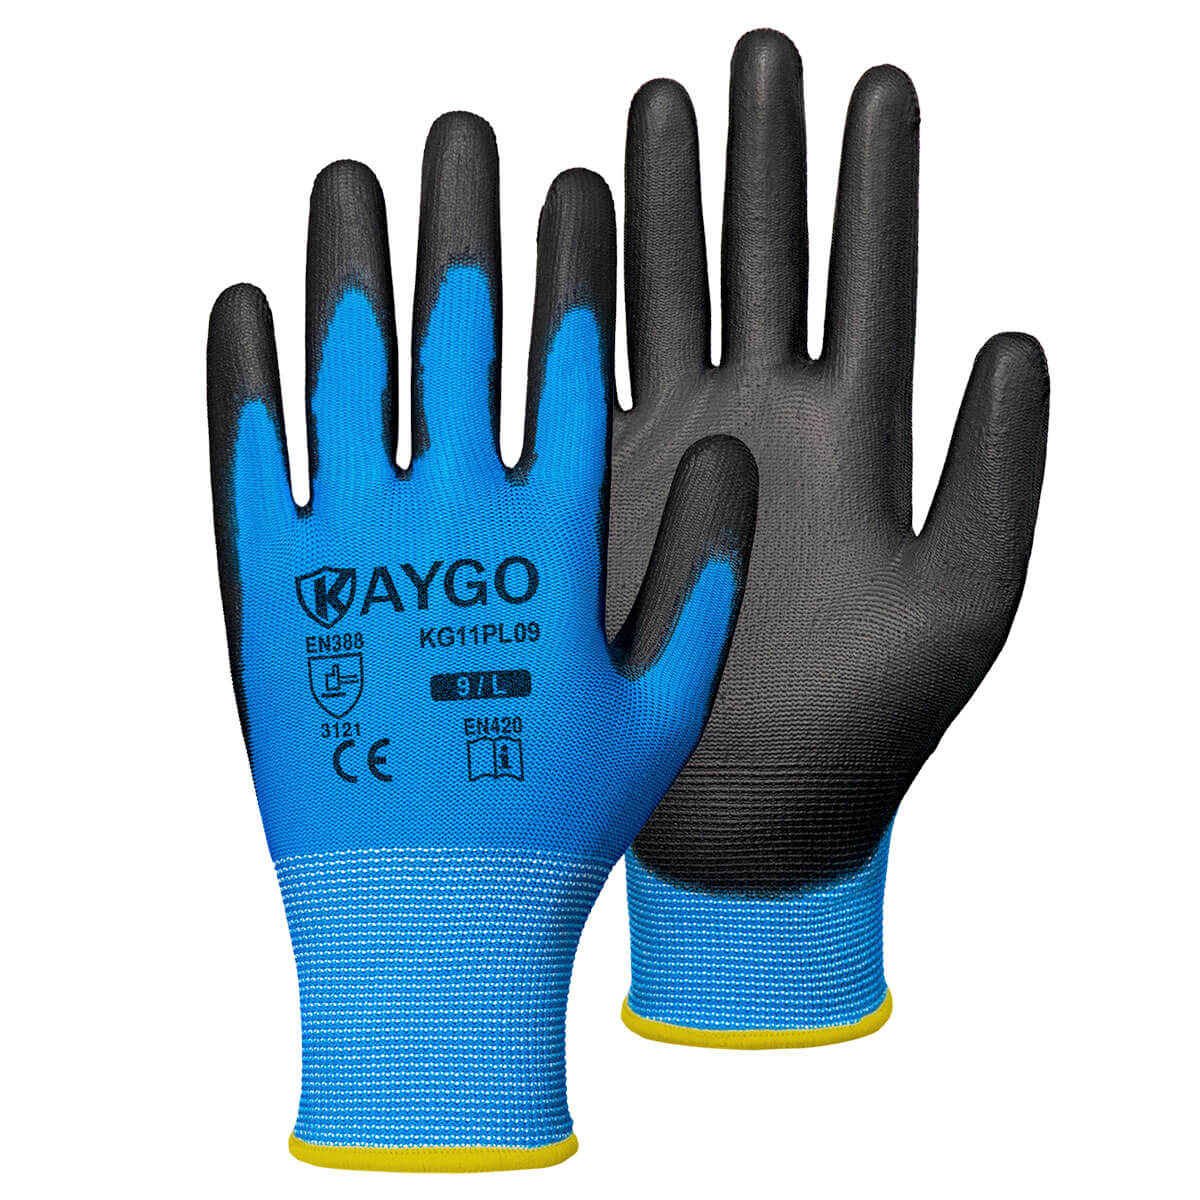 KAYGO Work Gloves PU Coated-12 Pairs, KG15P,Nylon Lite Polyurethane Safety  Work Gloves, Gray Polyurethane Coated, Knit Wrist Cuff,Ideal for Light Duty  Work (Medium, Black) 